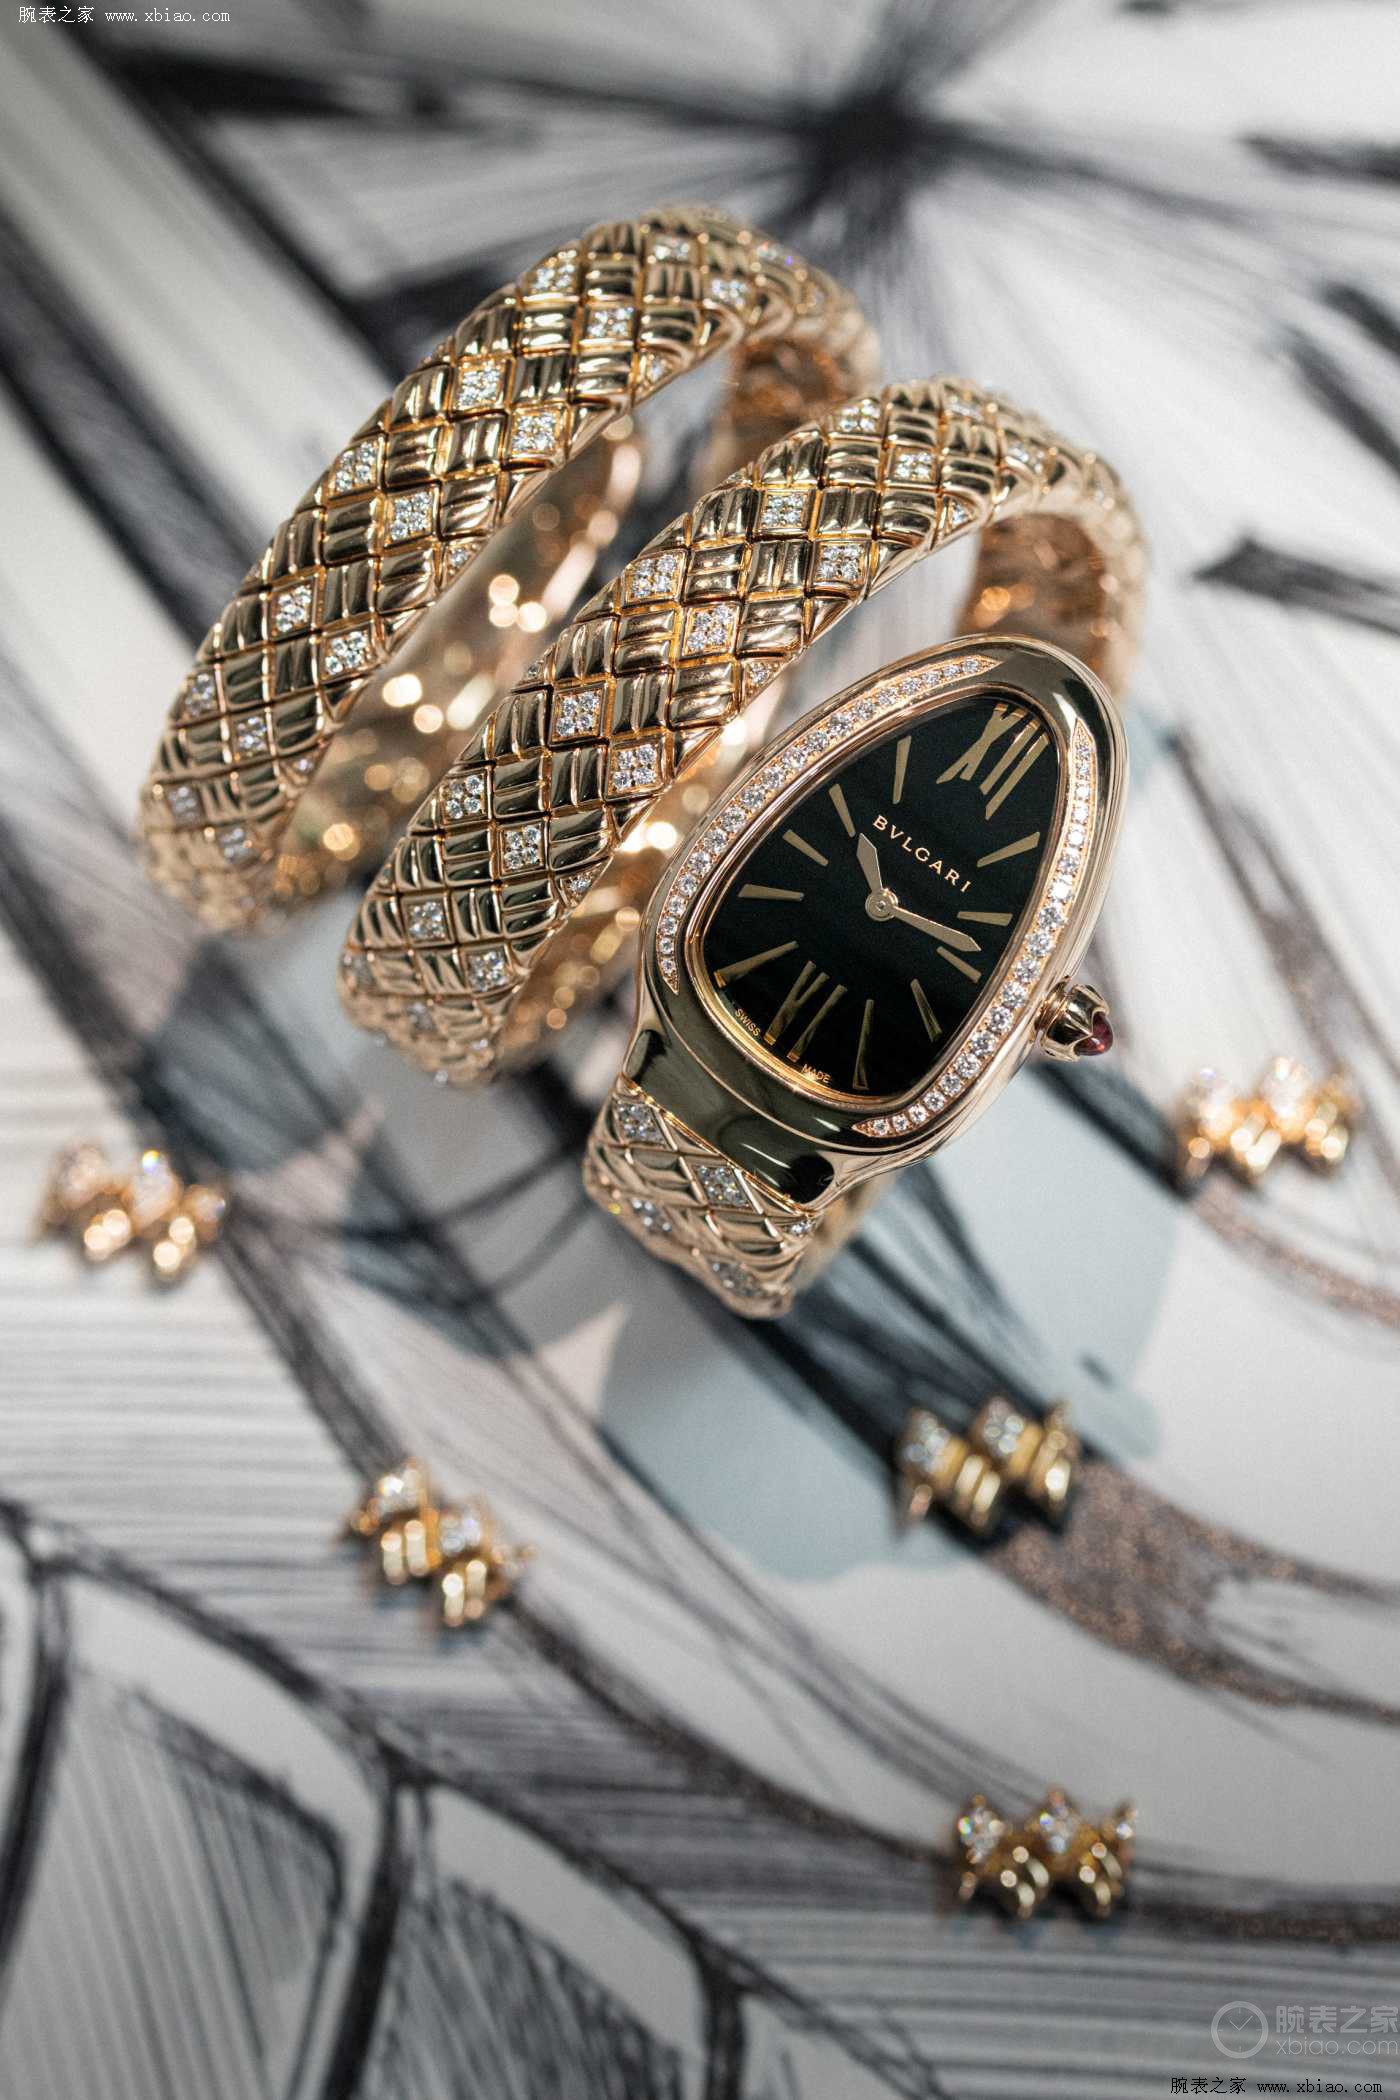 serpenti系列经典缠绕式腕表巧妙融合宝格丽精湛的珠宝技艺,每款时计